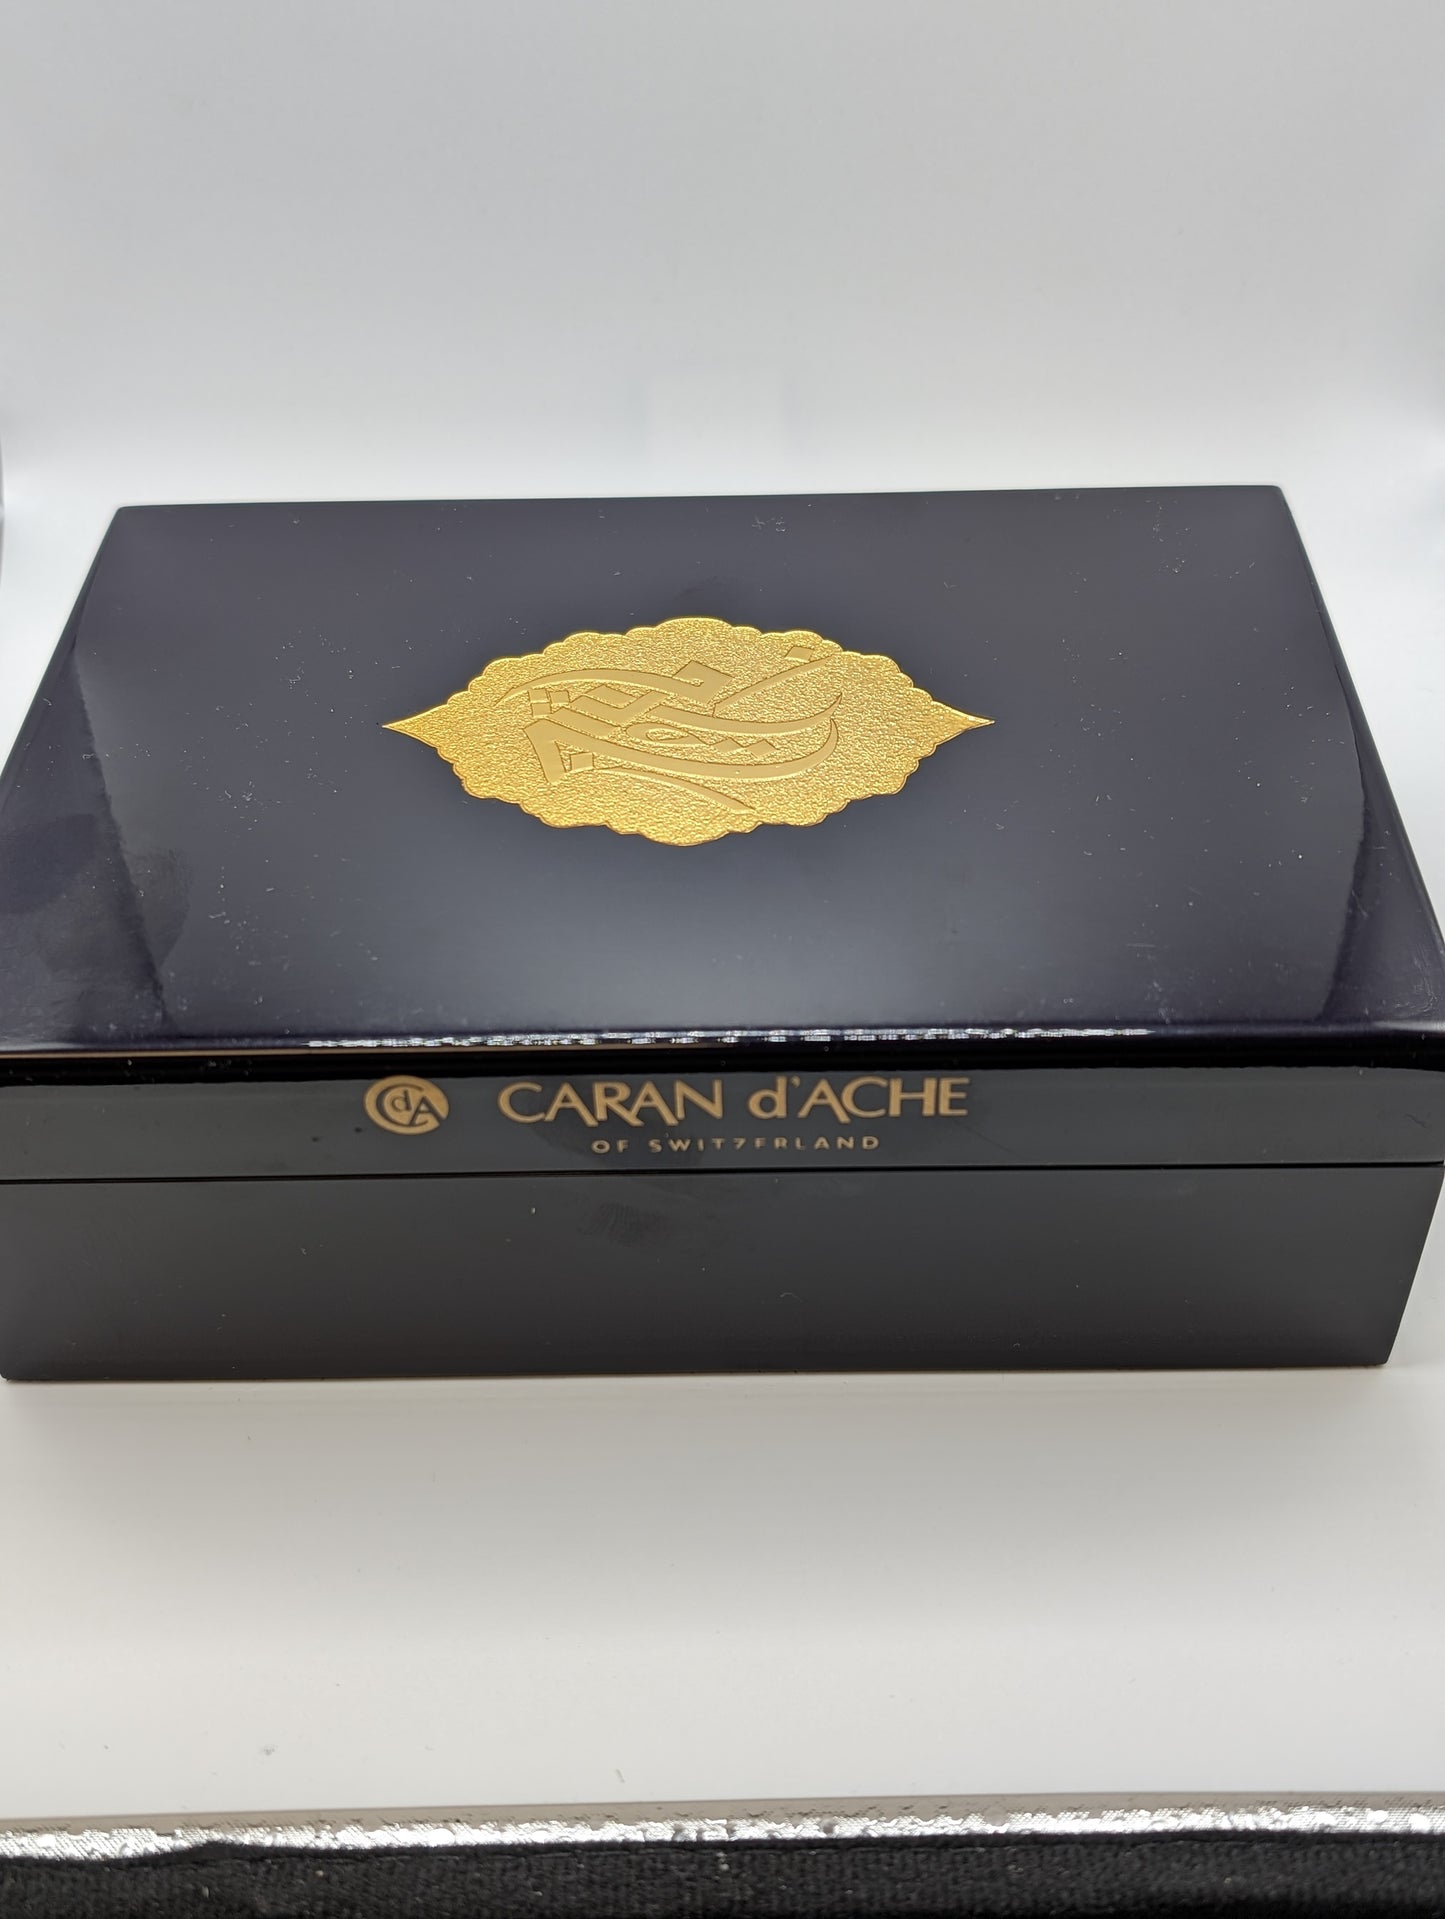 Caran d'Ache 1001 Arabian Nights Fountain Pen Limited Edition 361 of 1,001